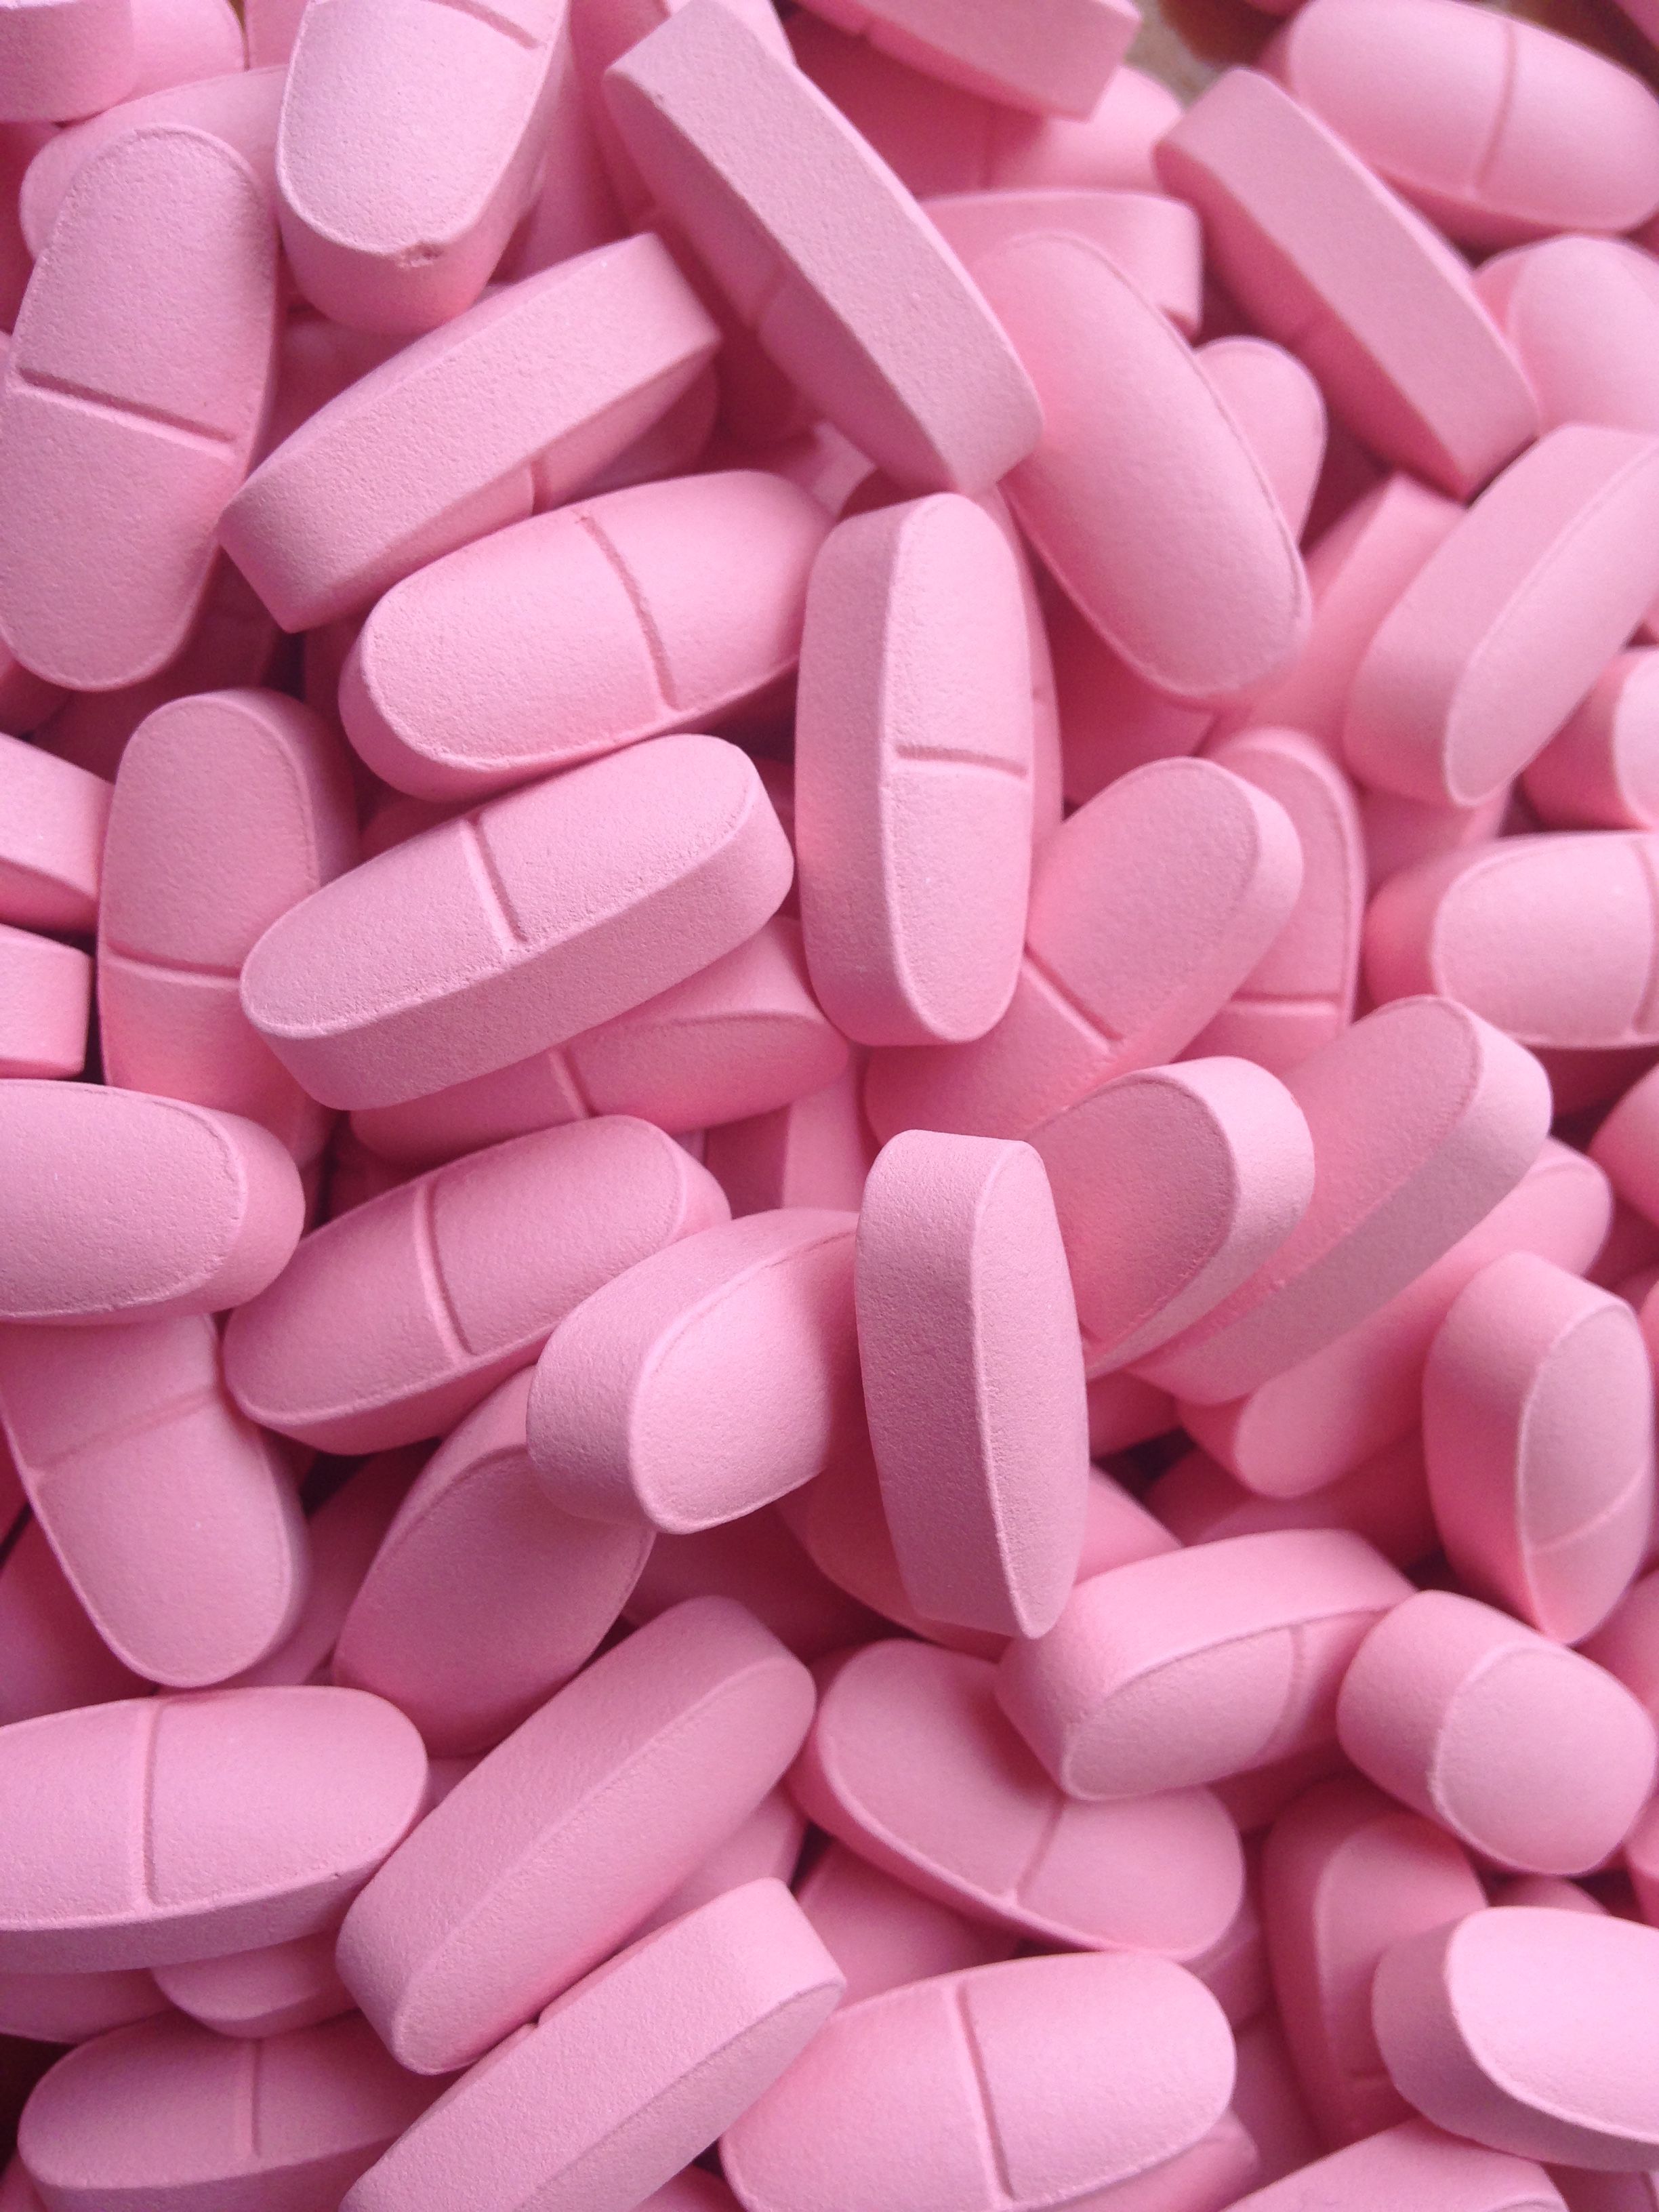 Pink Drugs Aesthetic - HD Wallpaper 